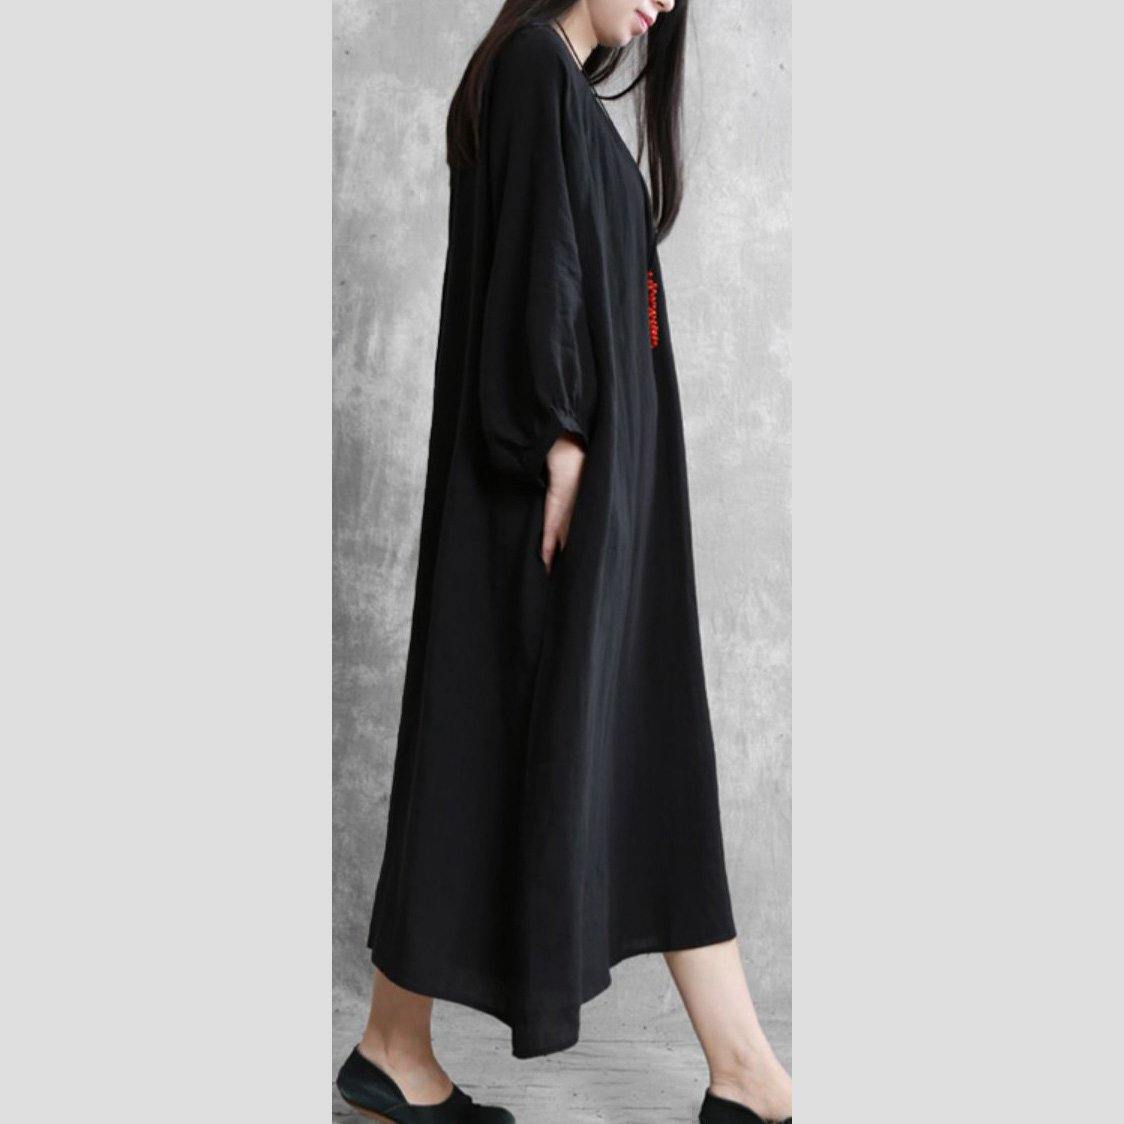 French black linen dress o neck Batwing Sleeve Traveling Dress - Omychic